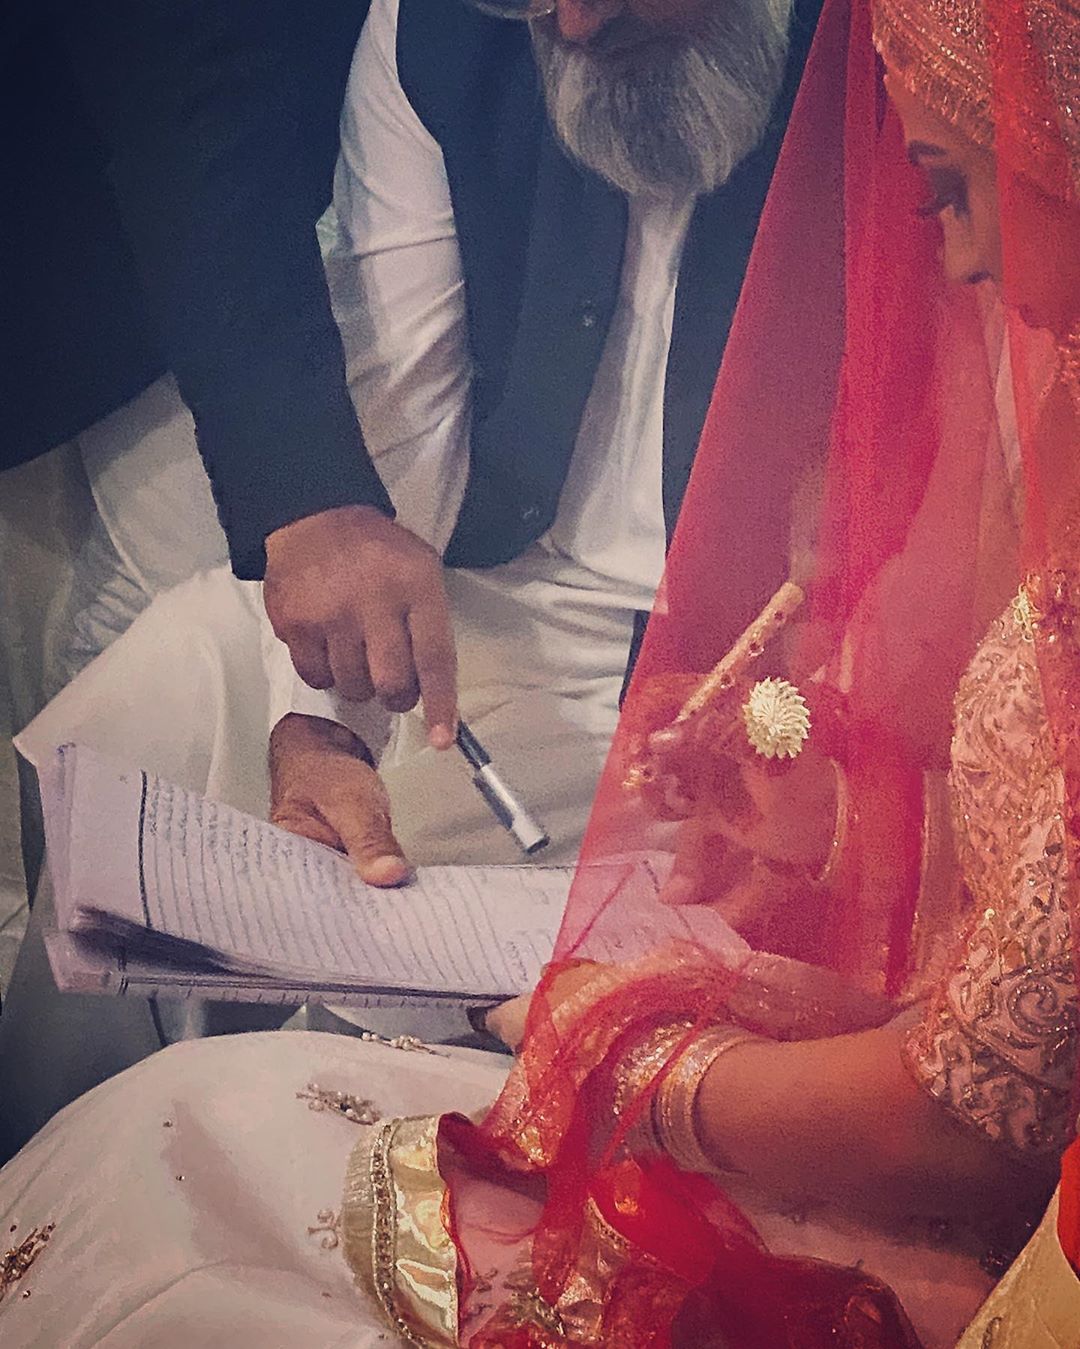 Drama Actress Hiba Khan Got Married - Beautiful Pictures